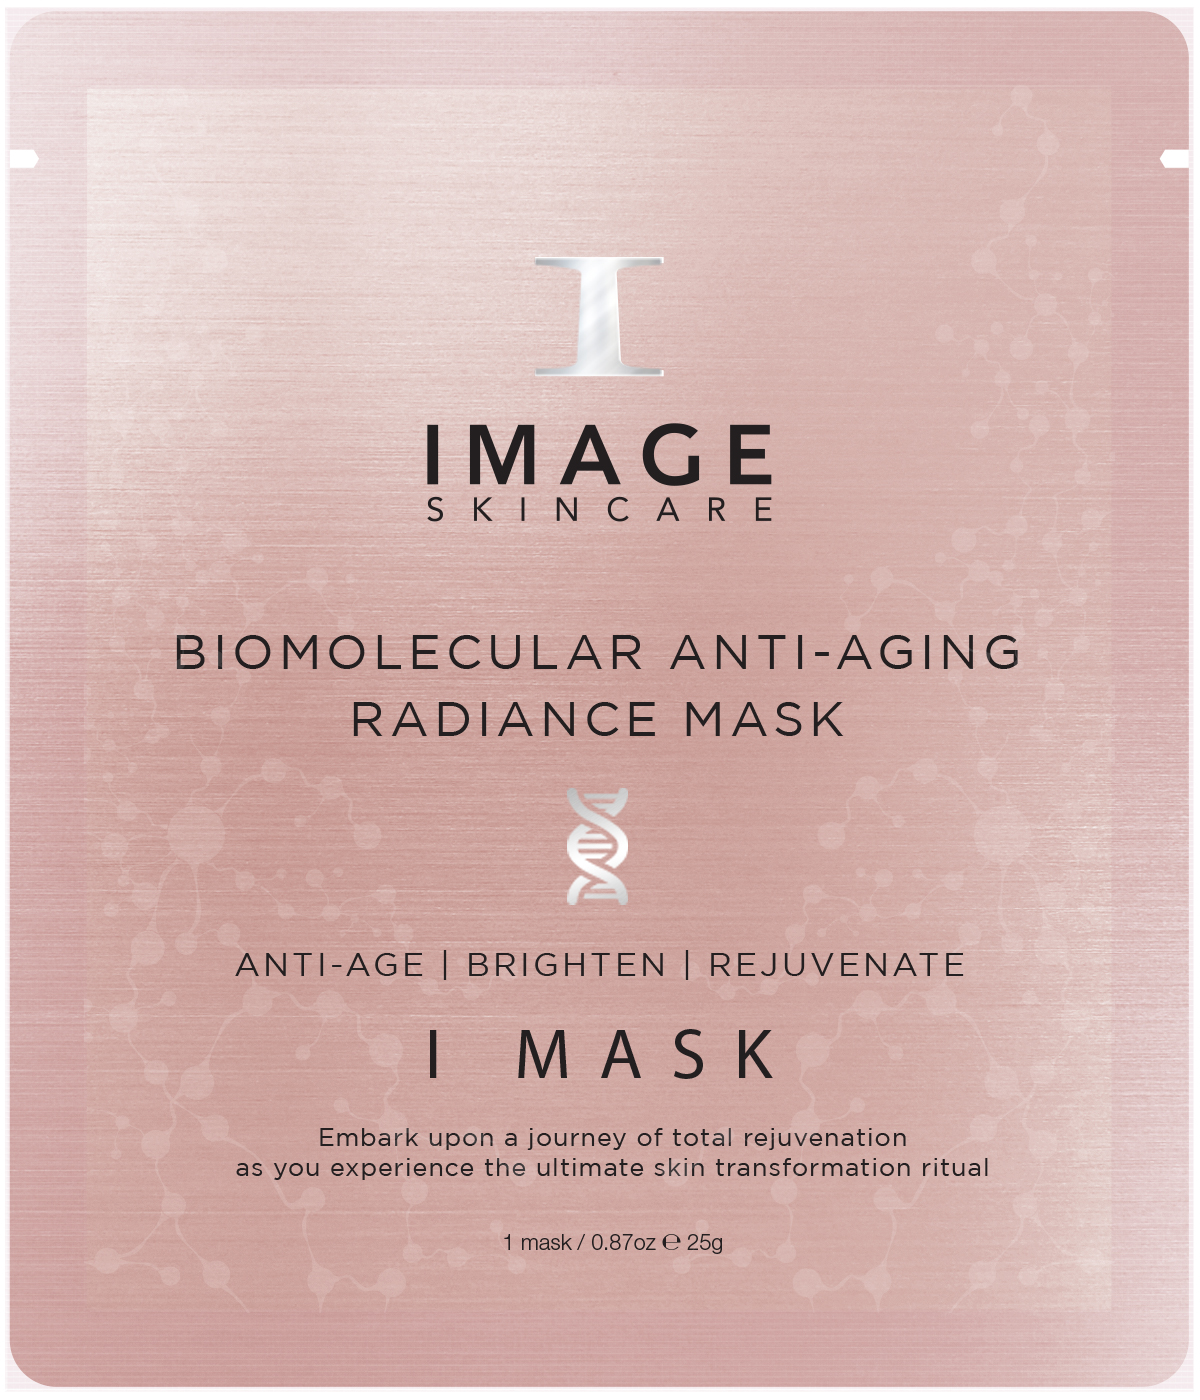 I MASK biomolecular anti-aging radiance mask foil.jpg